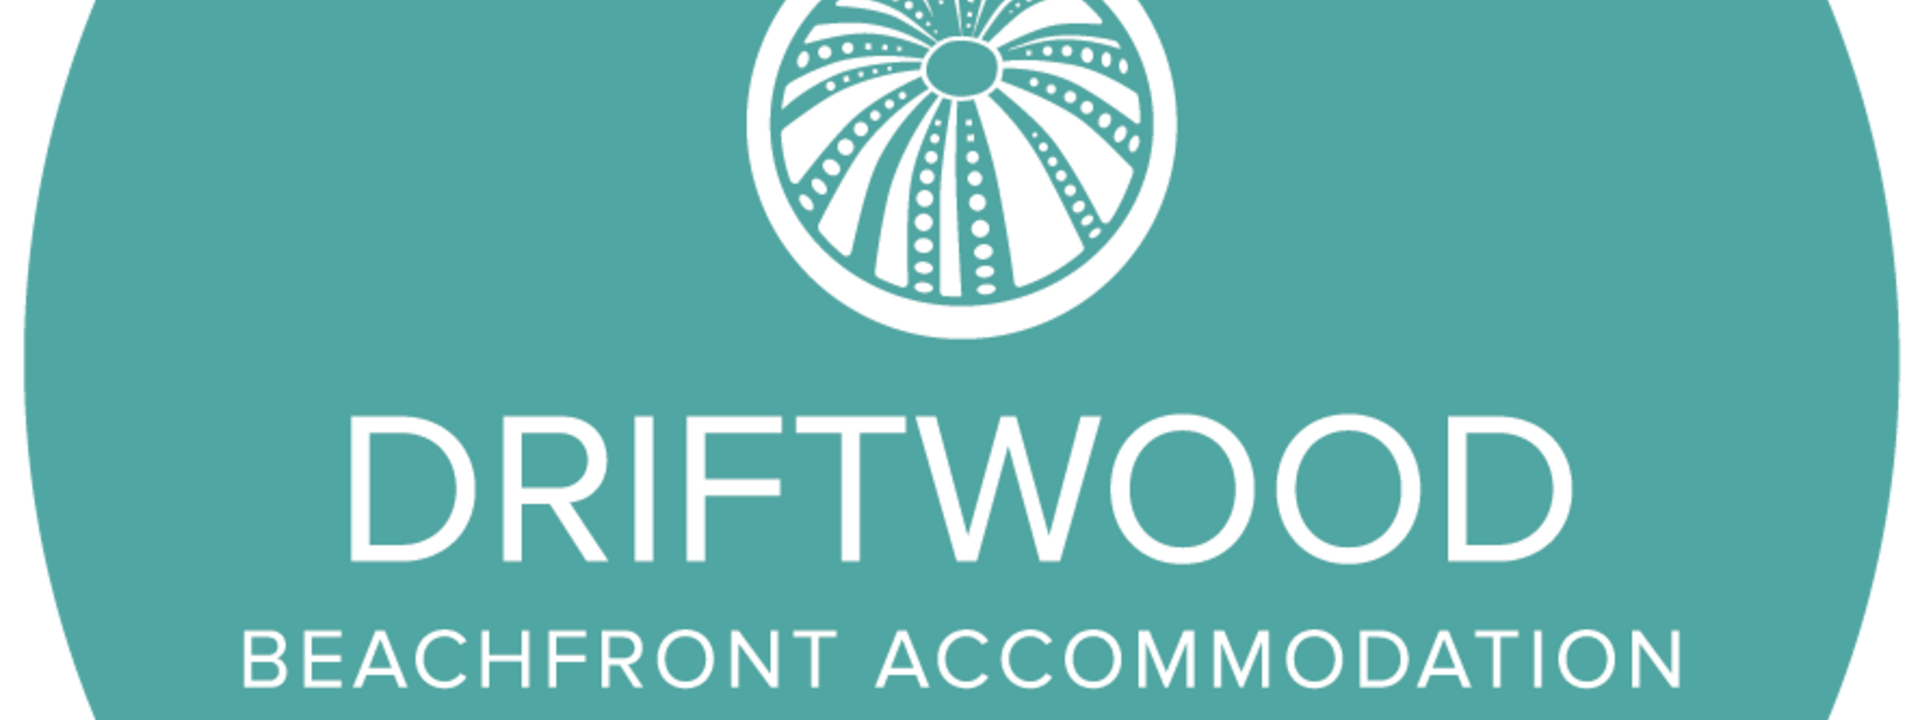 driftwood-circle-logo-01.png